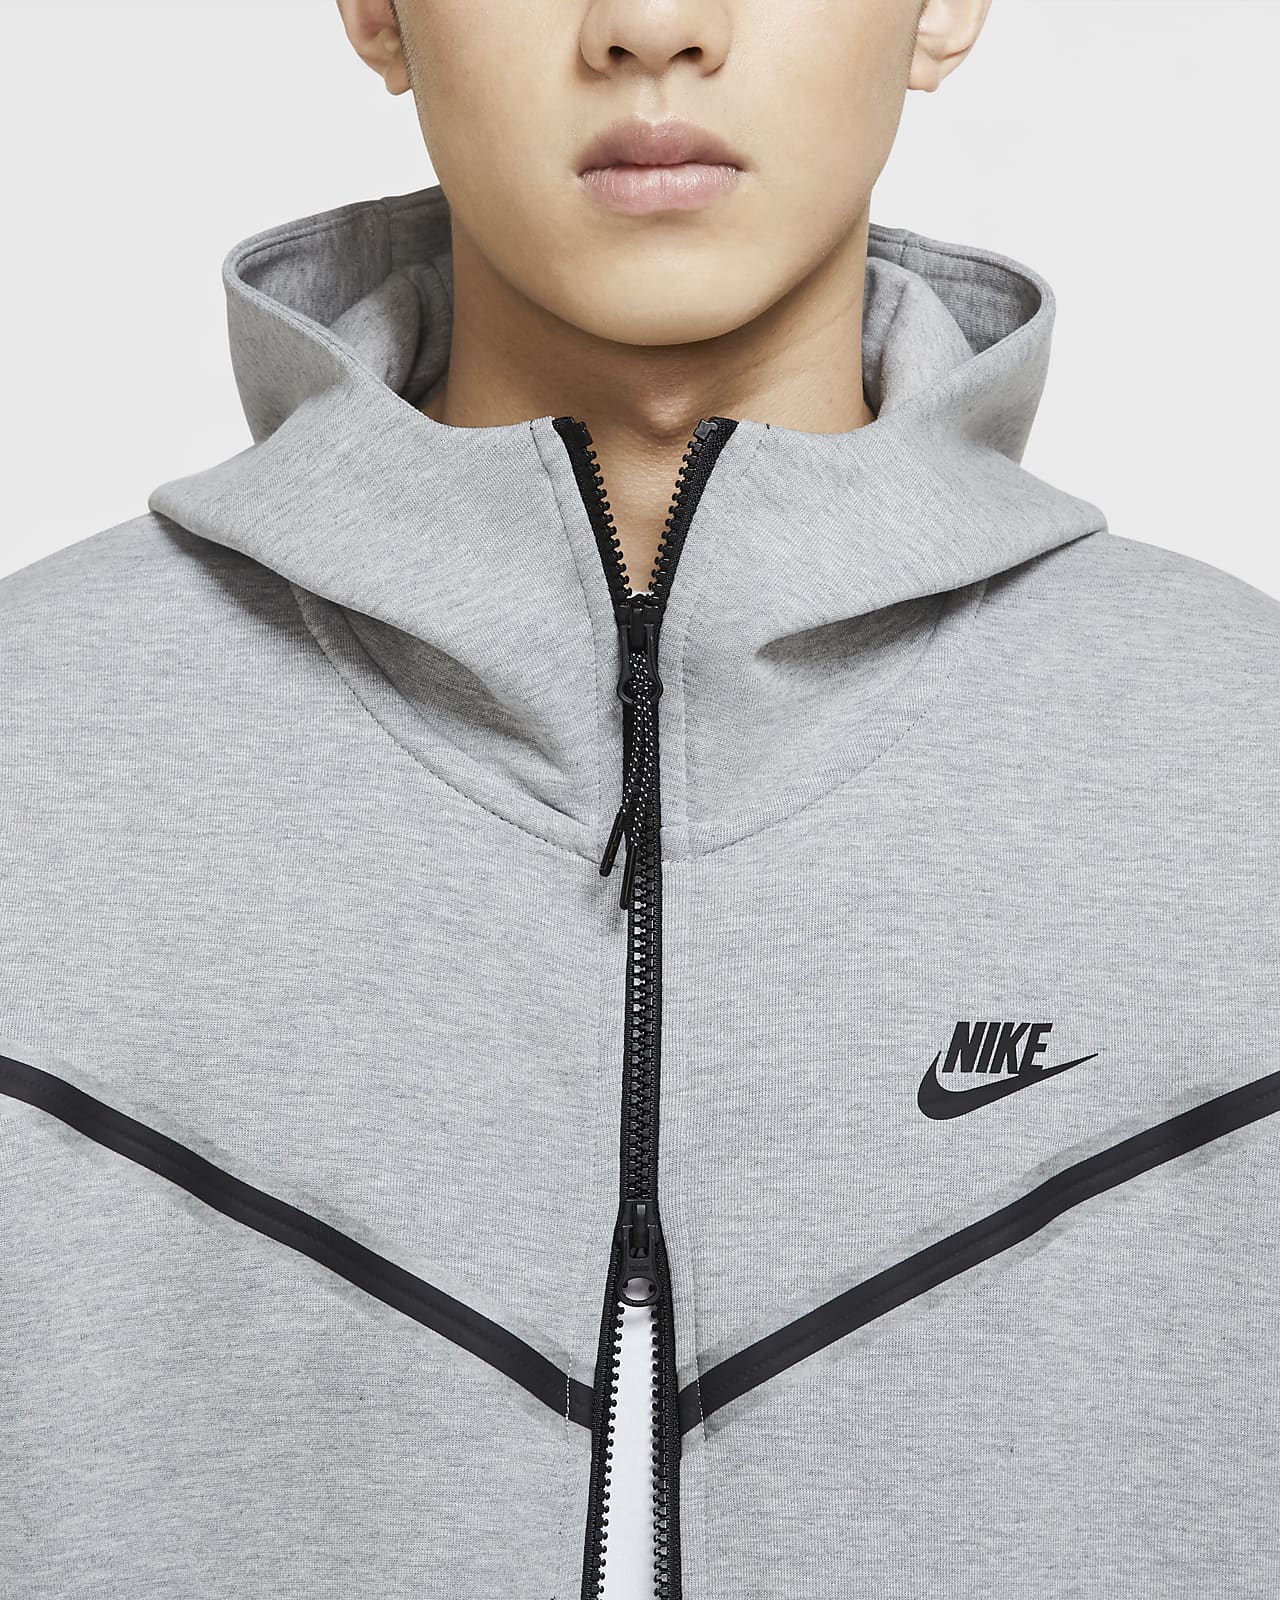 Fleece Nike Jacket Cheap Offers, Save 57% | jlcatj.gob.mx